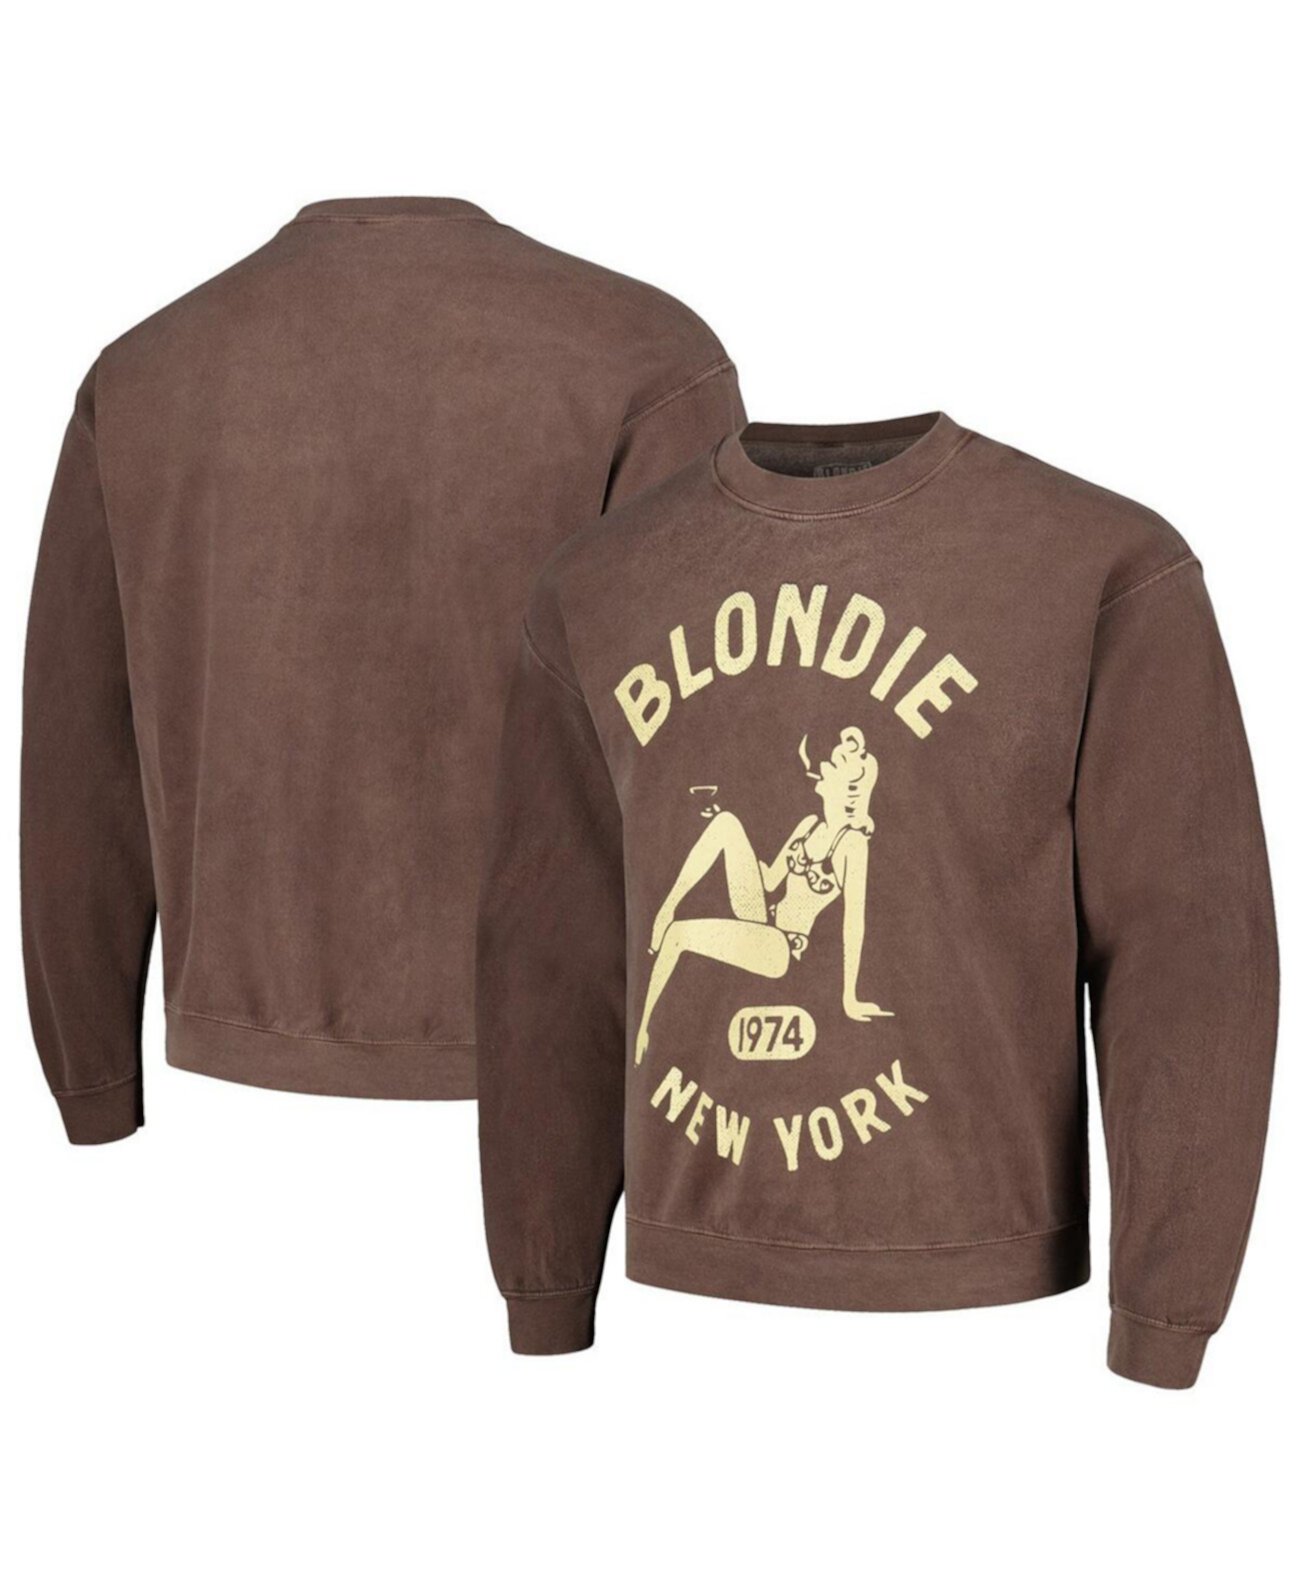 Men's Brown Distressed Blondie New York Pullover Sweatshirt Philcos